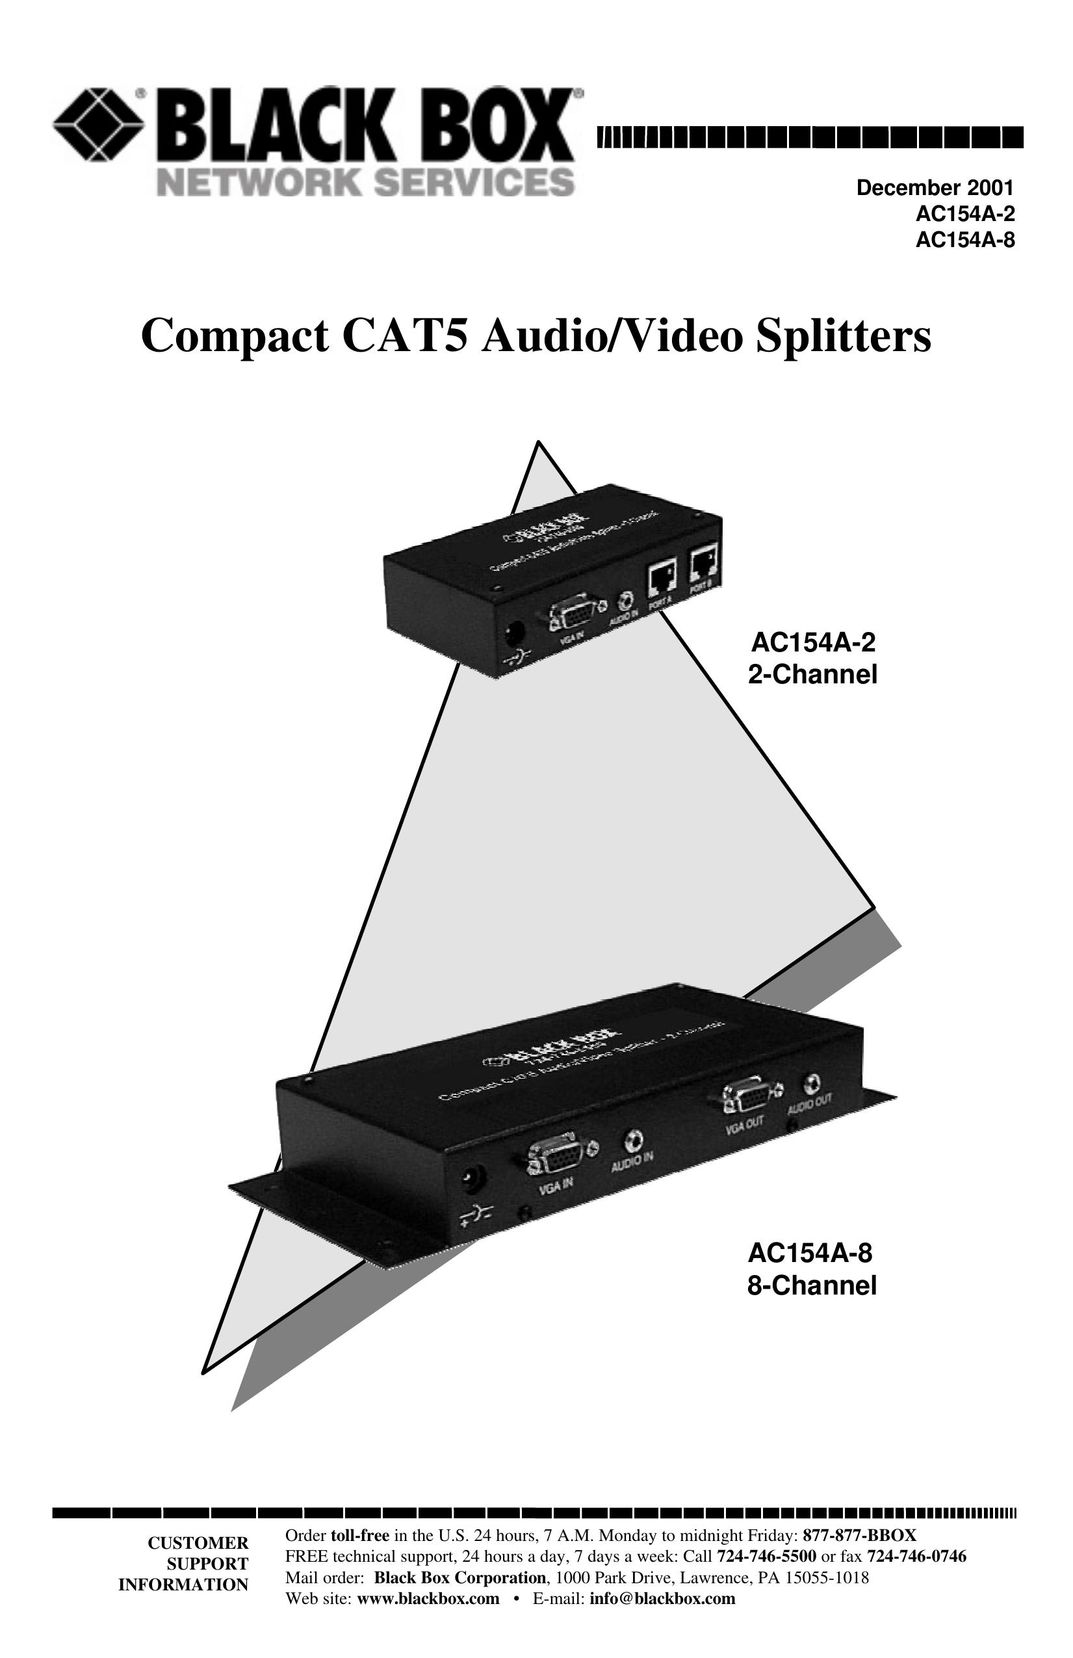 Black Box COMPACT CAT5 AUDIO/VIDEO SPLITTERS TV Video Accessories User Manual